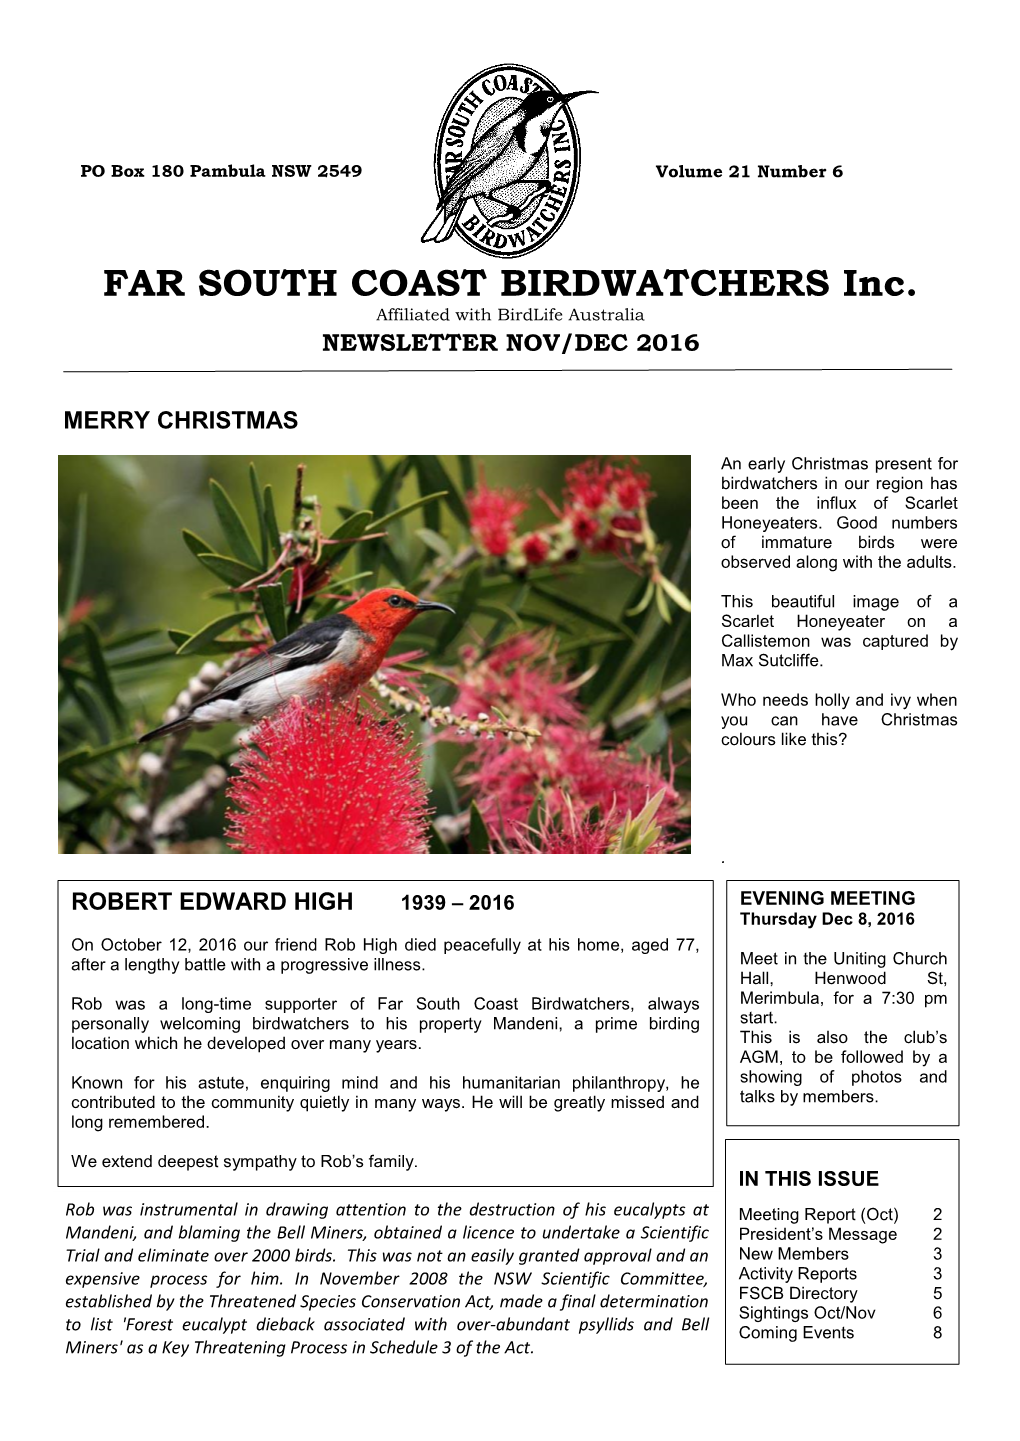 FAR SOUTH COAST BIRDWATCHERS Inc. Affiliated with Birdlife Australia